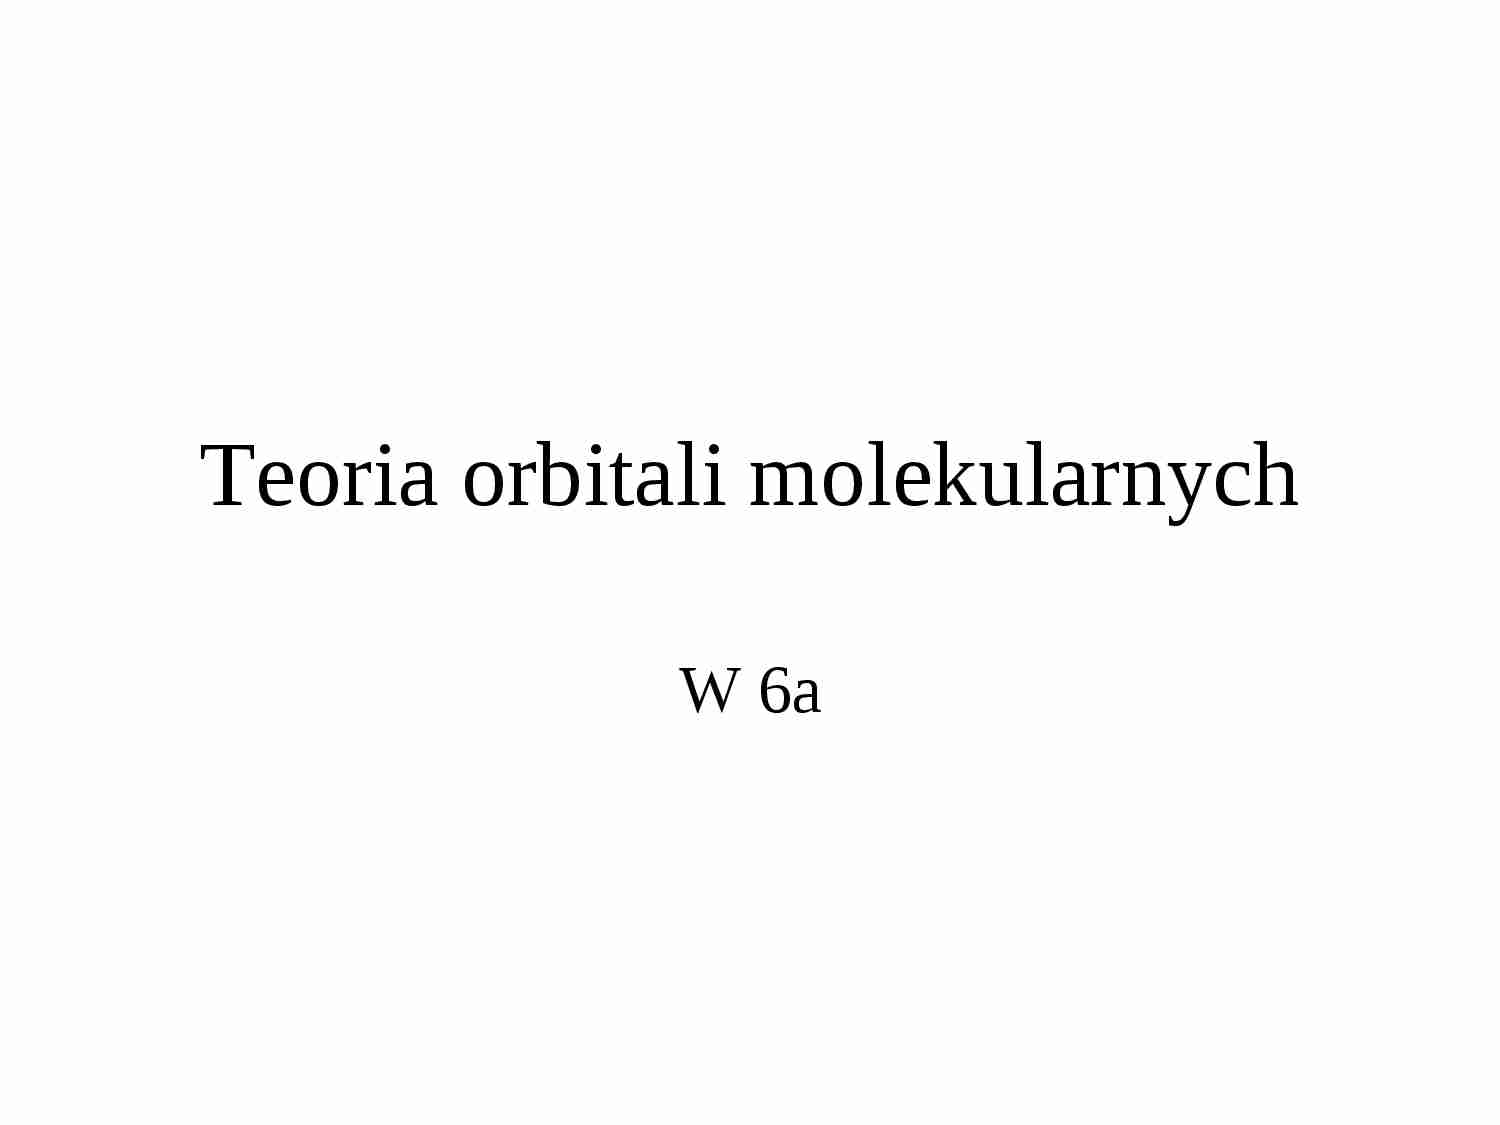 orbitale molekularne - strona 1